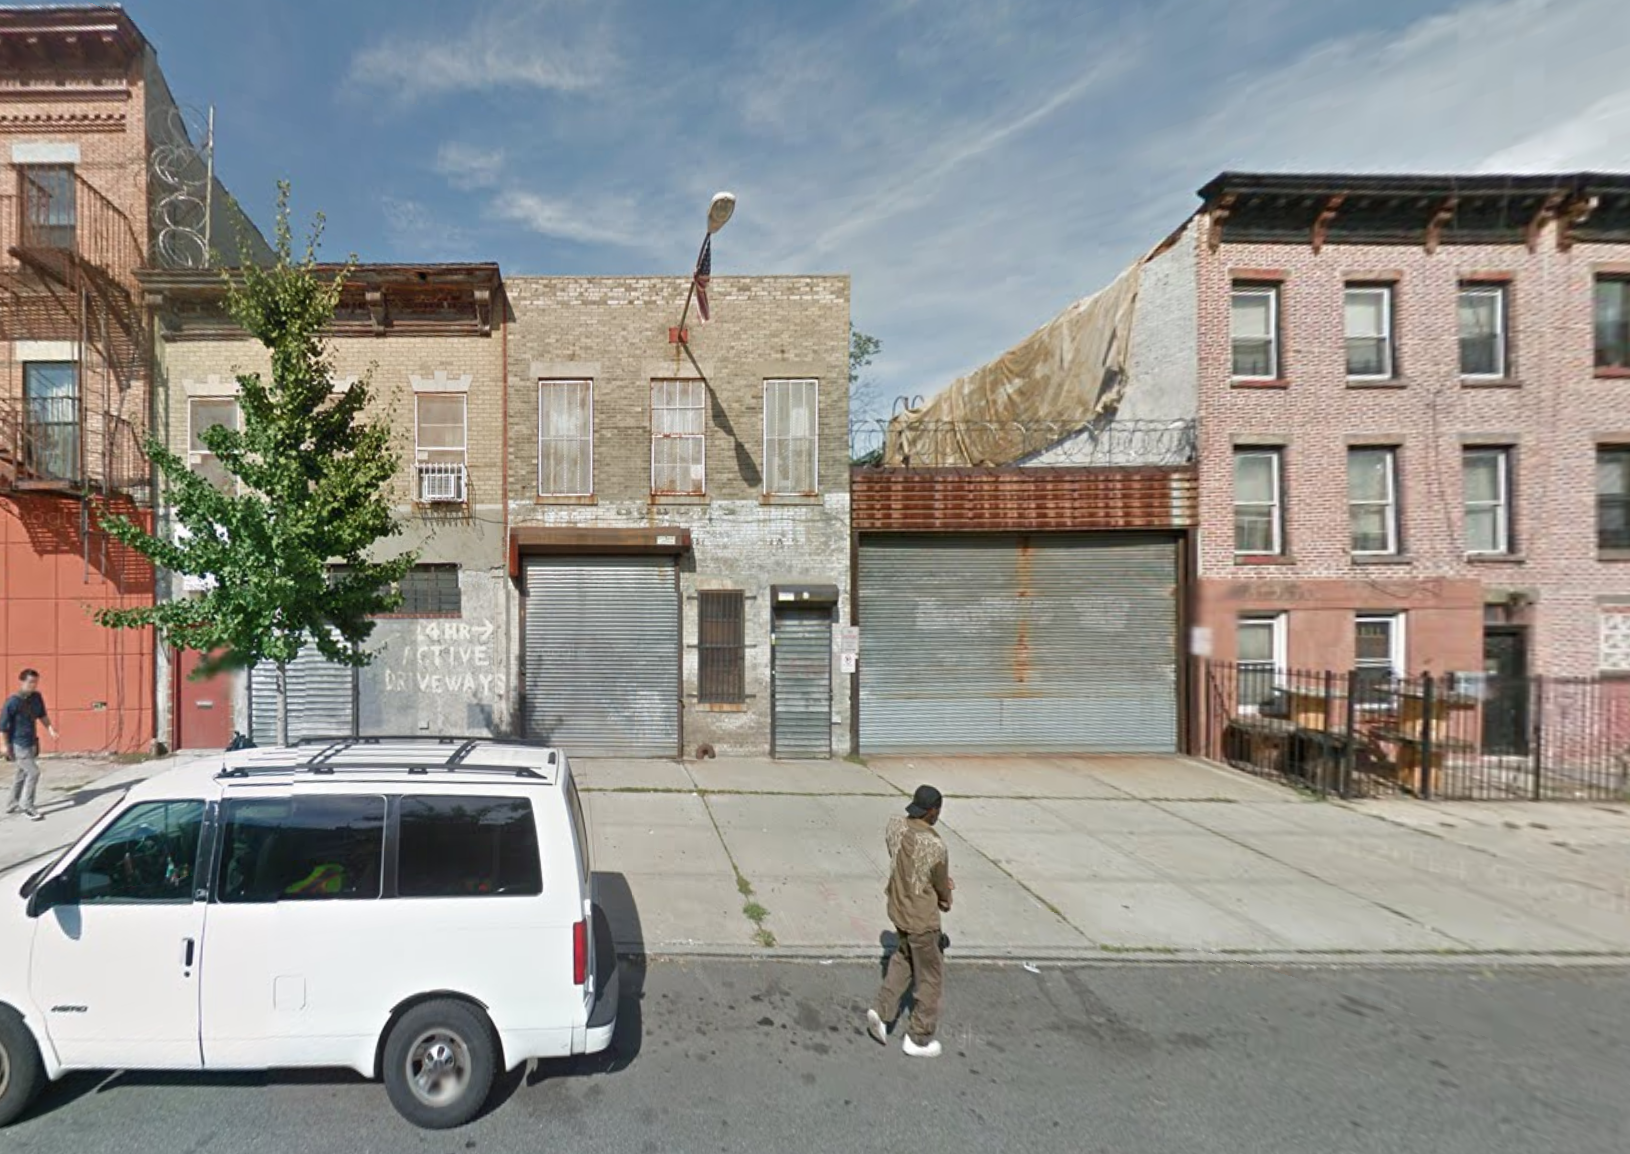 701 Prospect Place, image via Google Maps